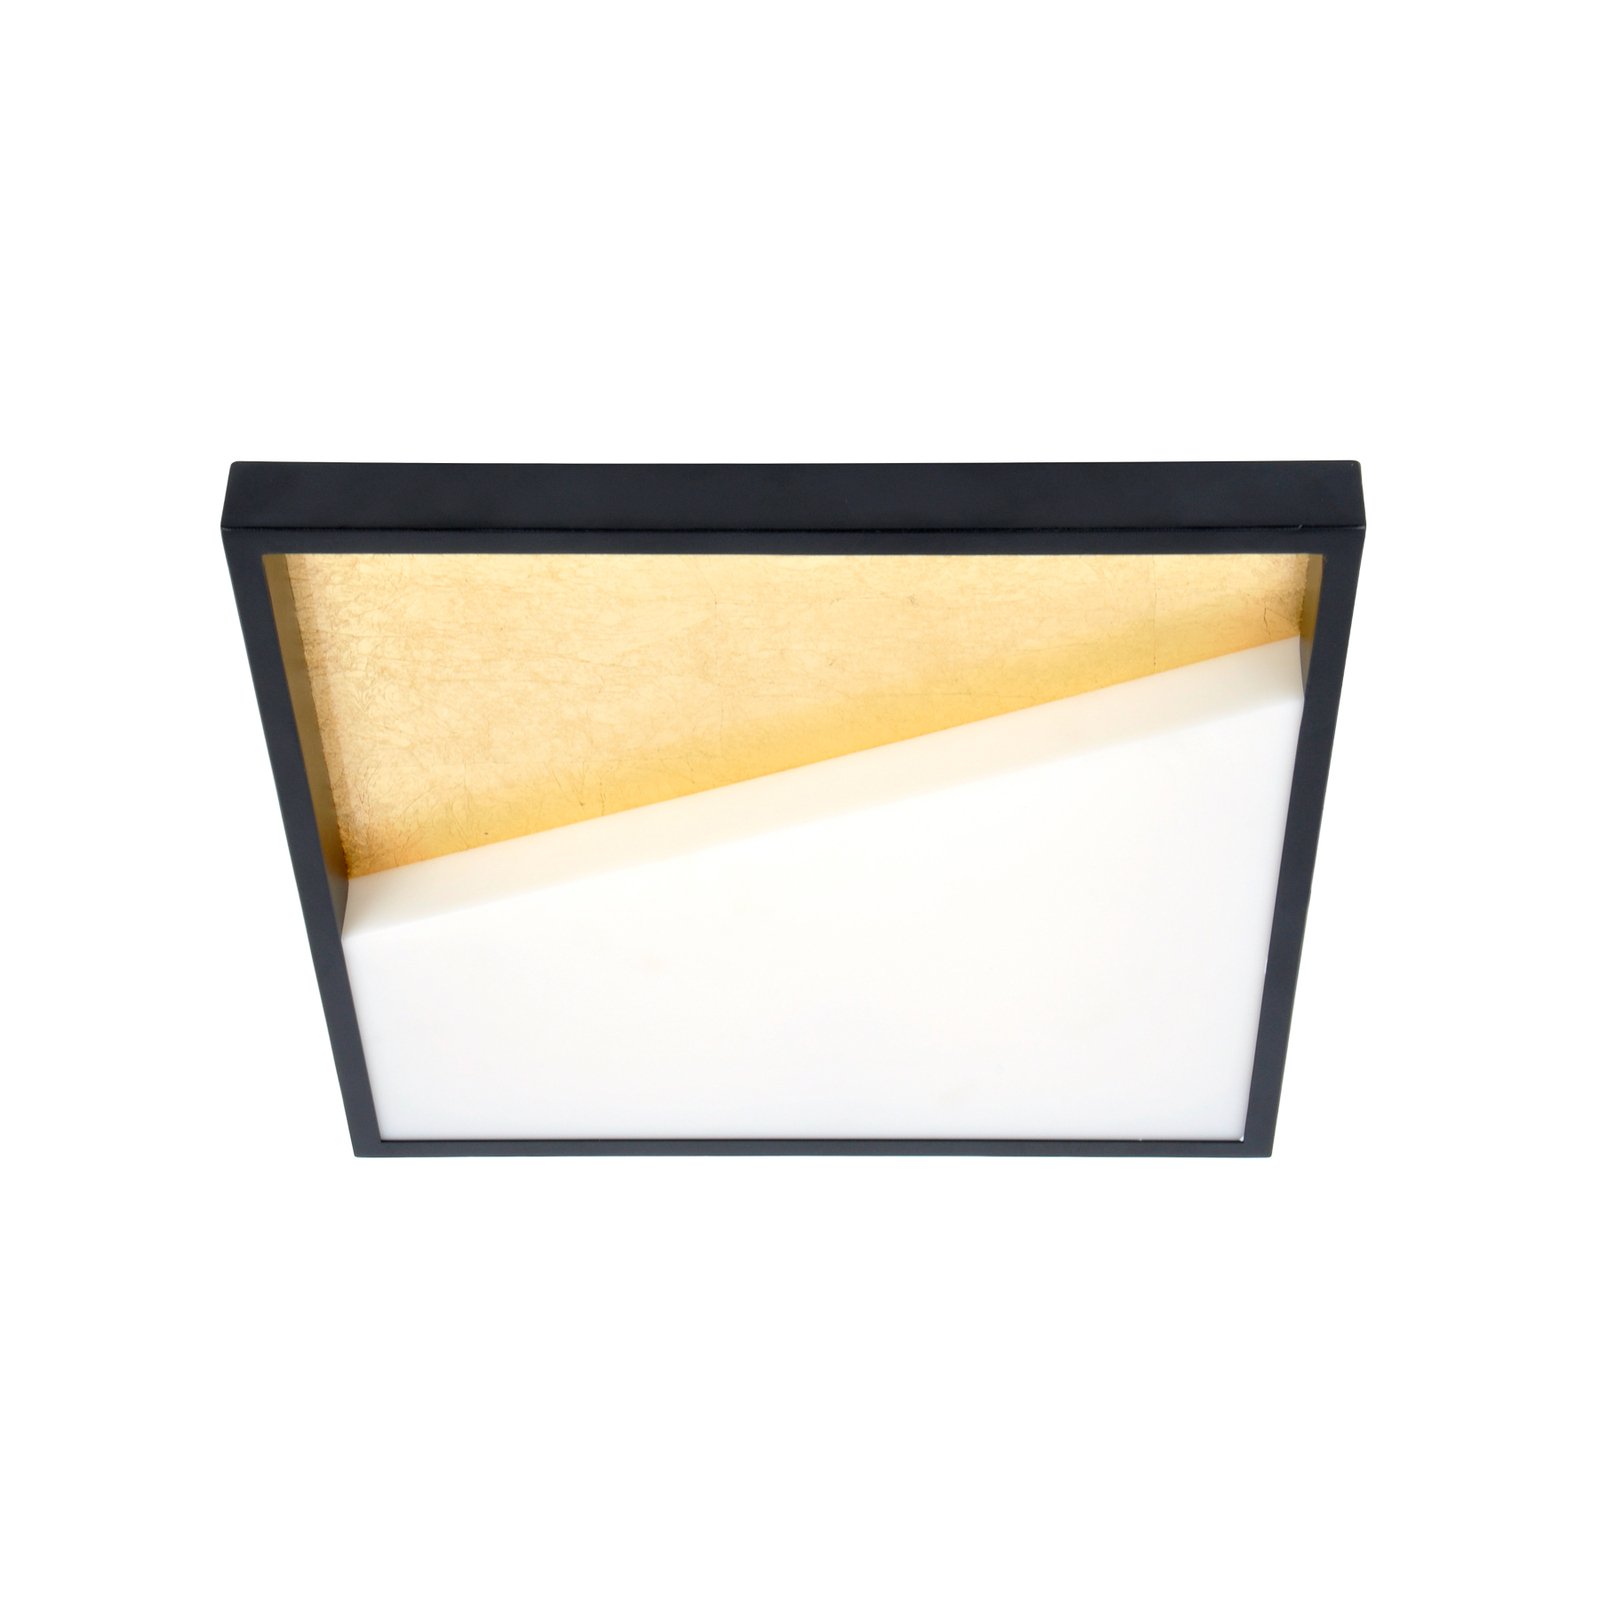 LED-Wandleuchte Vista, gold/schwarz, 40 x 40 cm